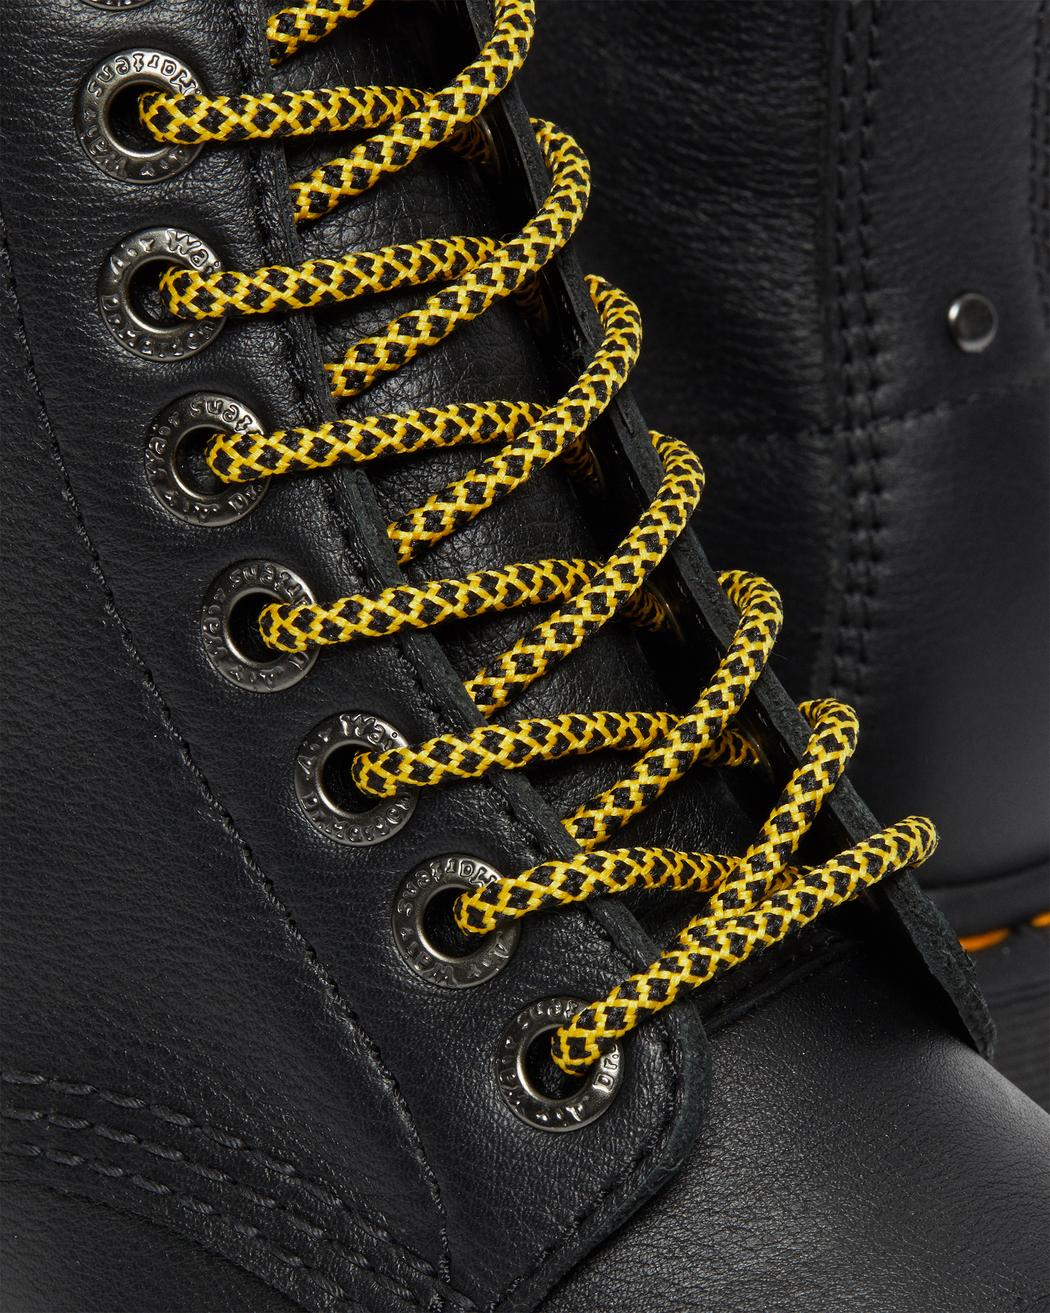 Dr Doc Martens Pink Sinclair Combat Boots Leather Zipper Women Size 8 Brand  New